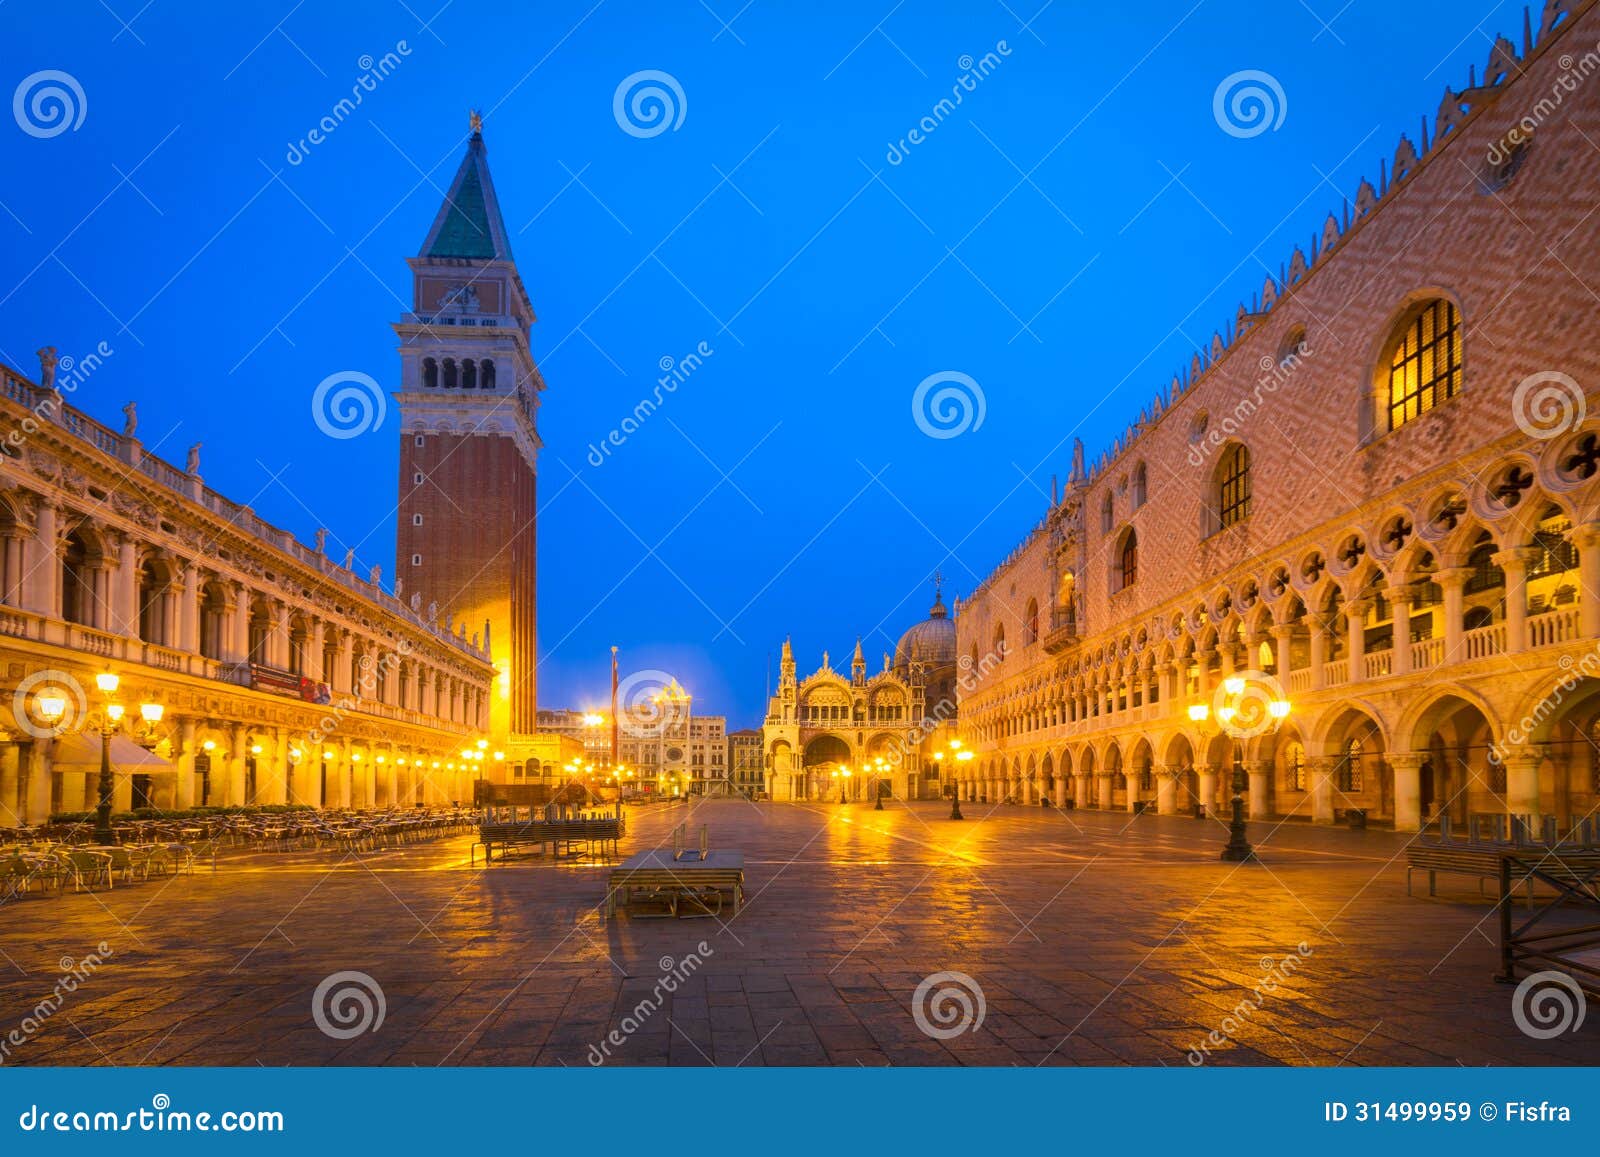 piazza san marco at dawn, venice, italy